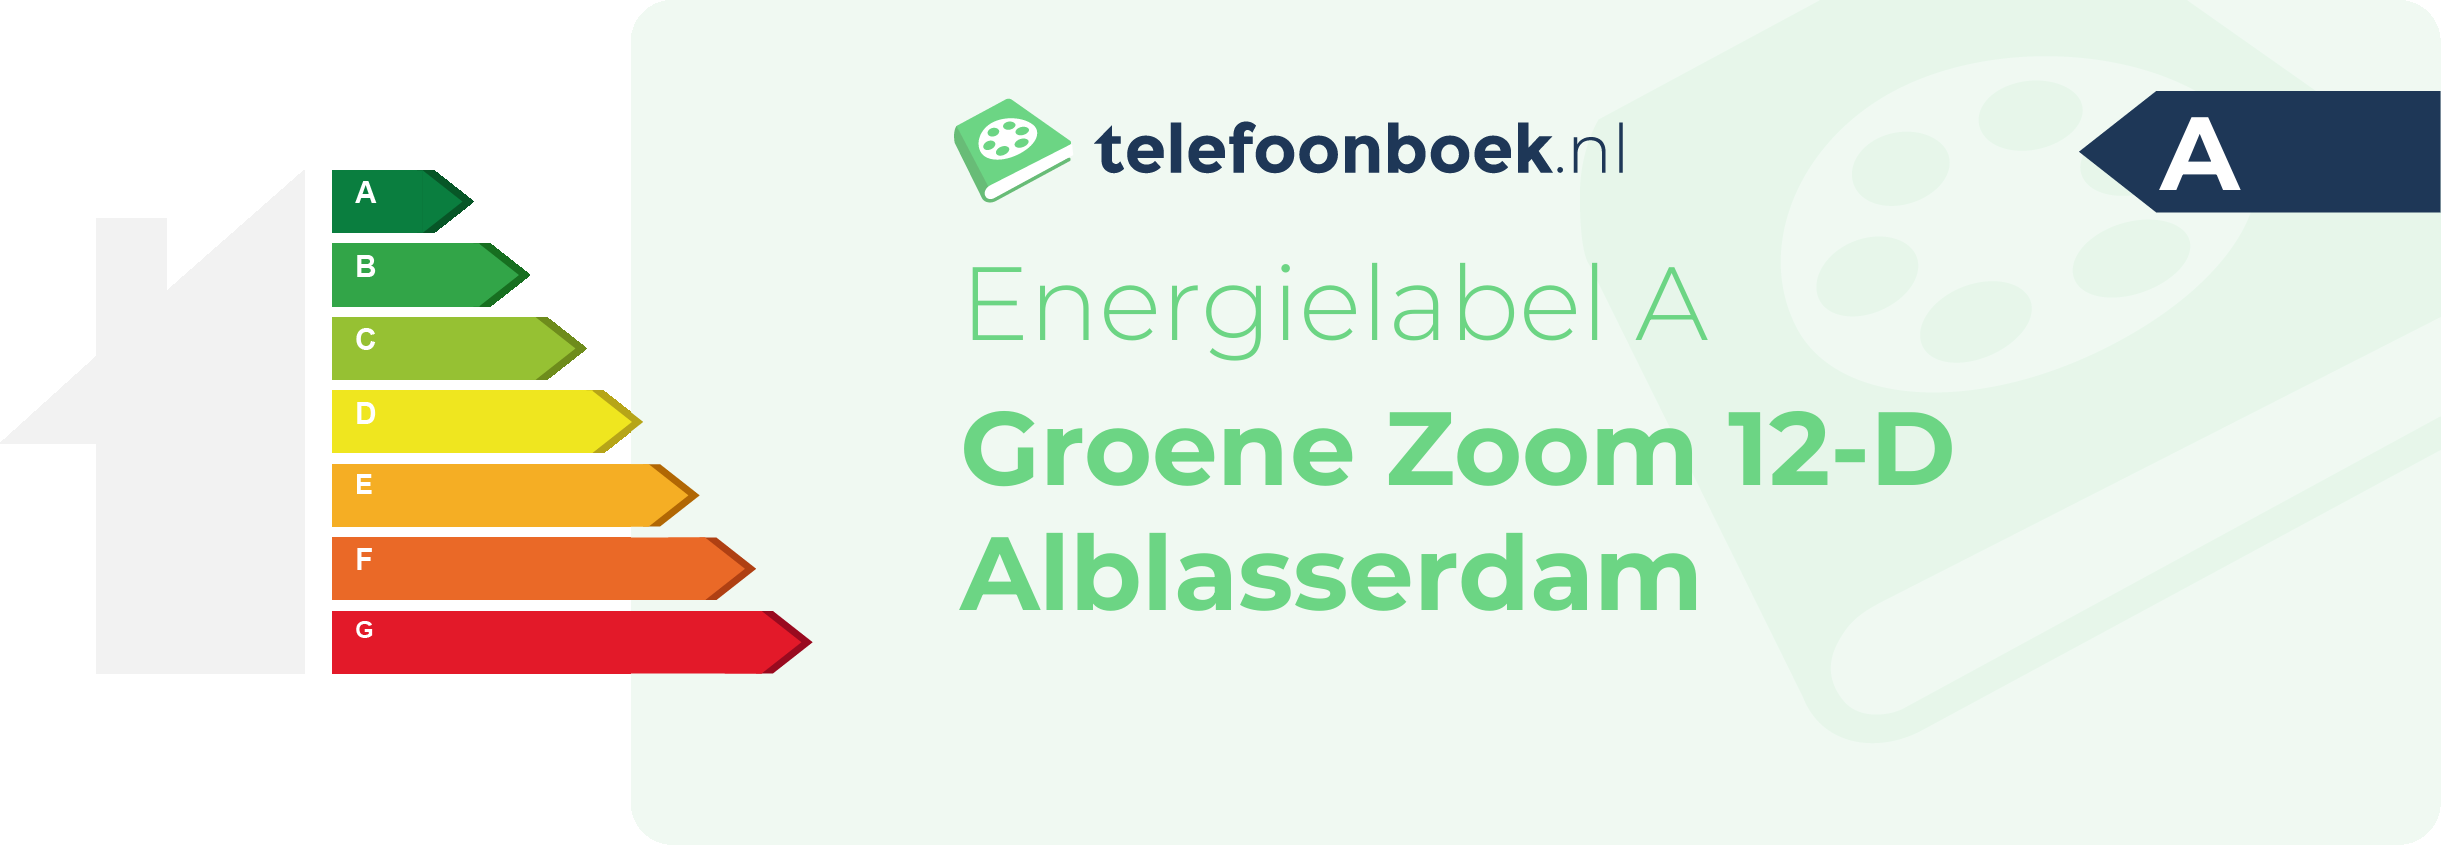 Energielabel Groene Zoom 12-D Alblasserdam